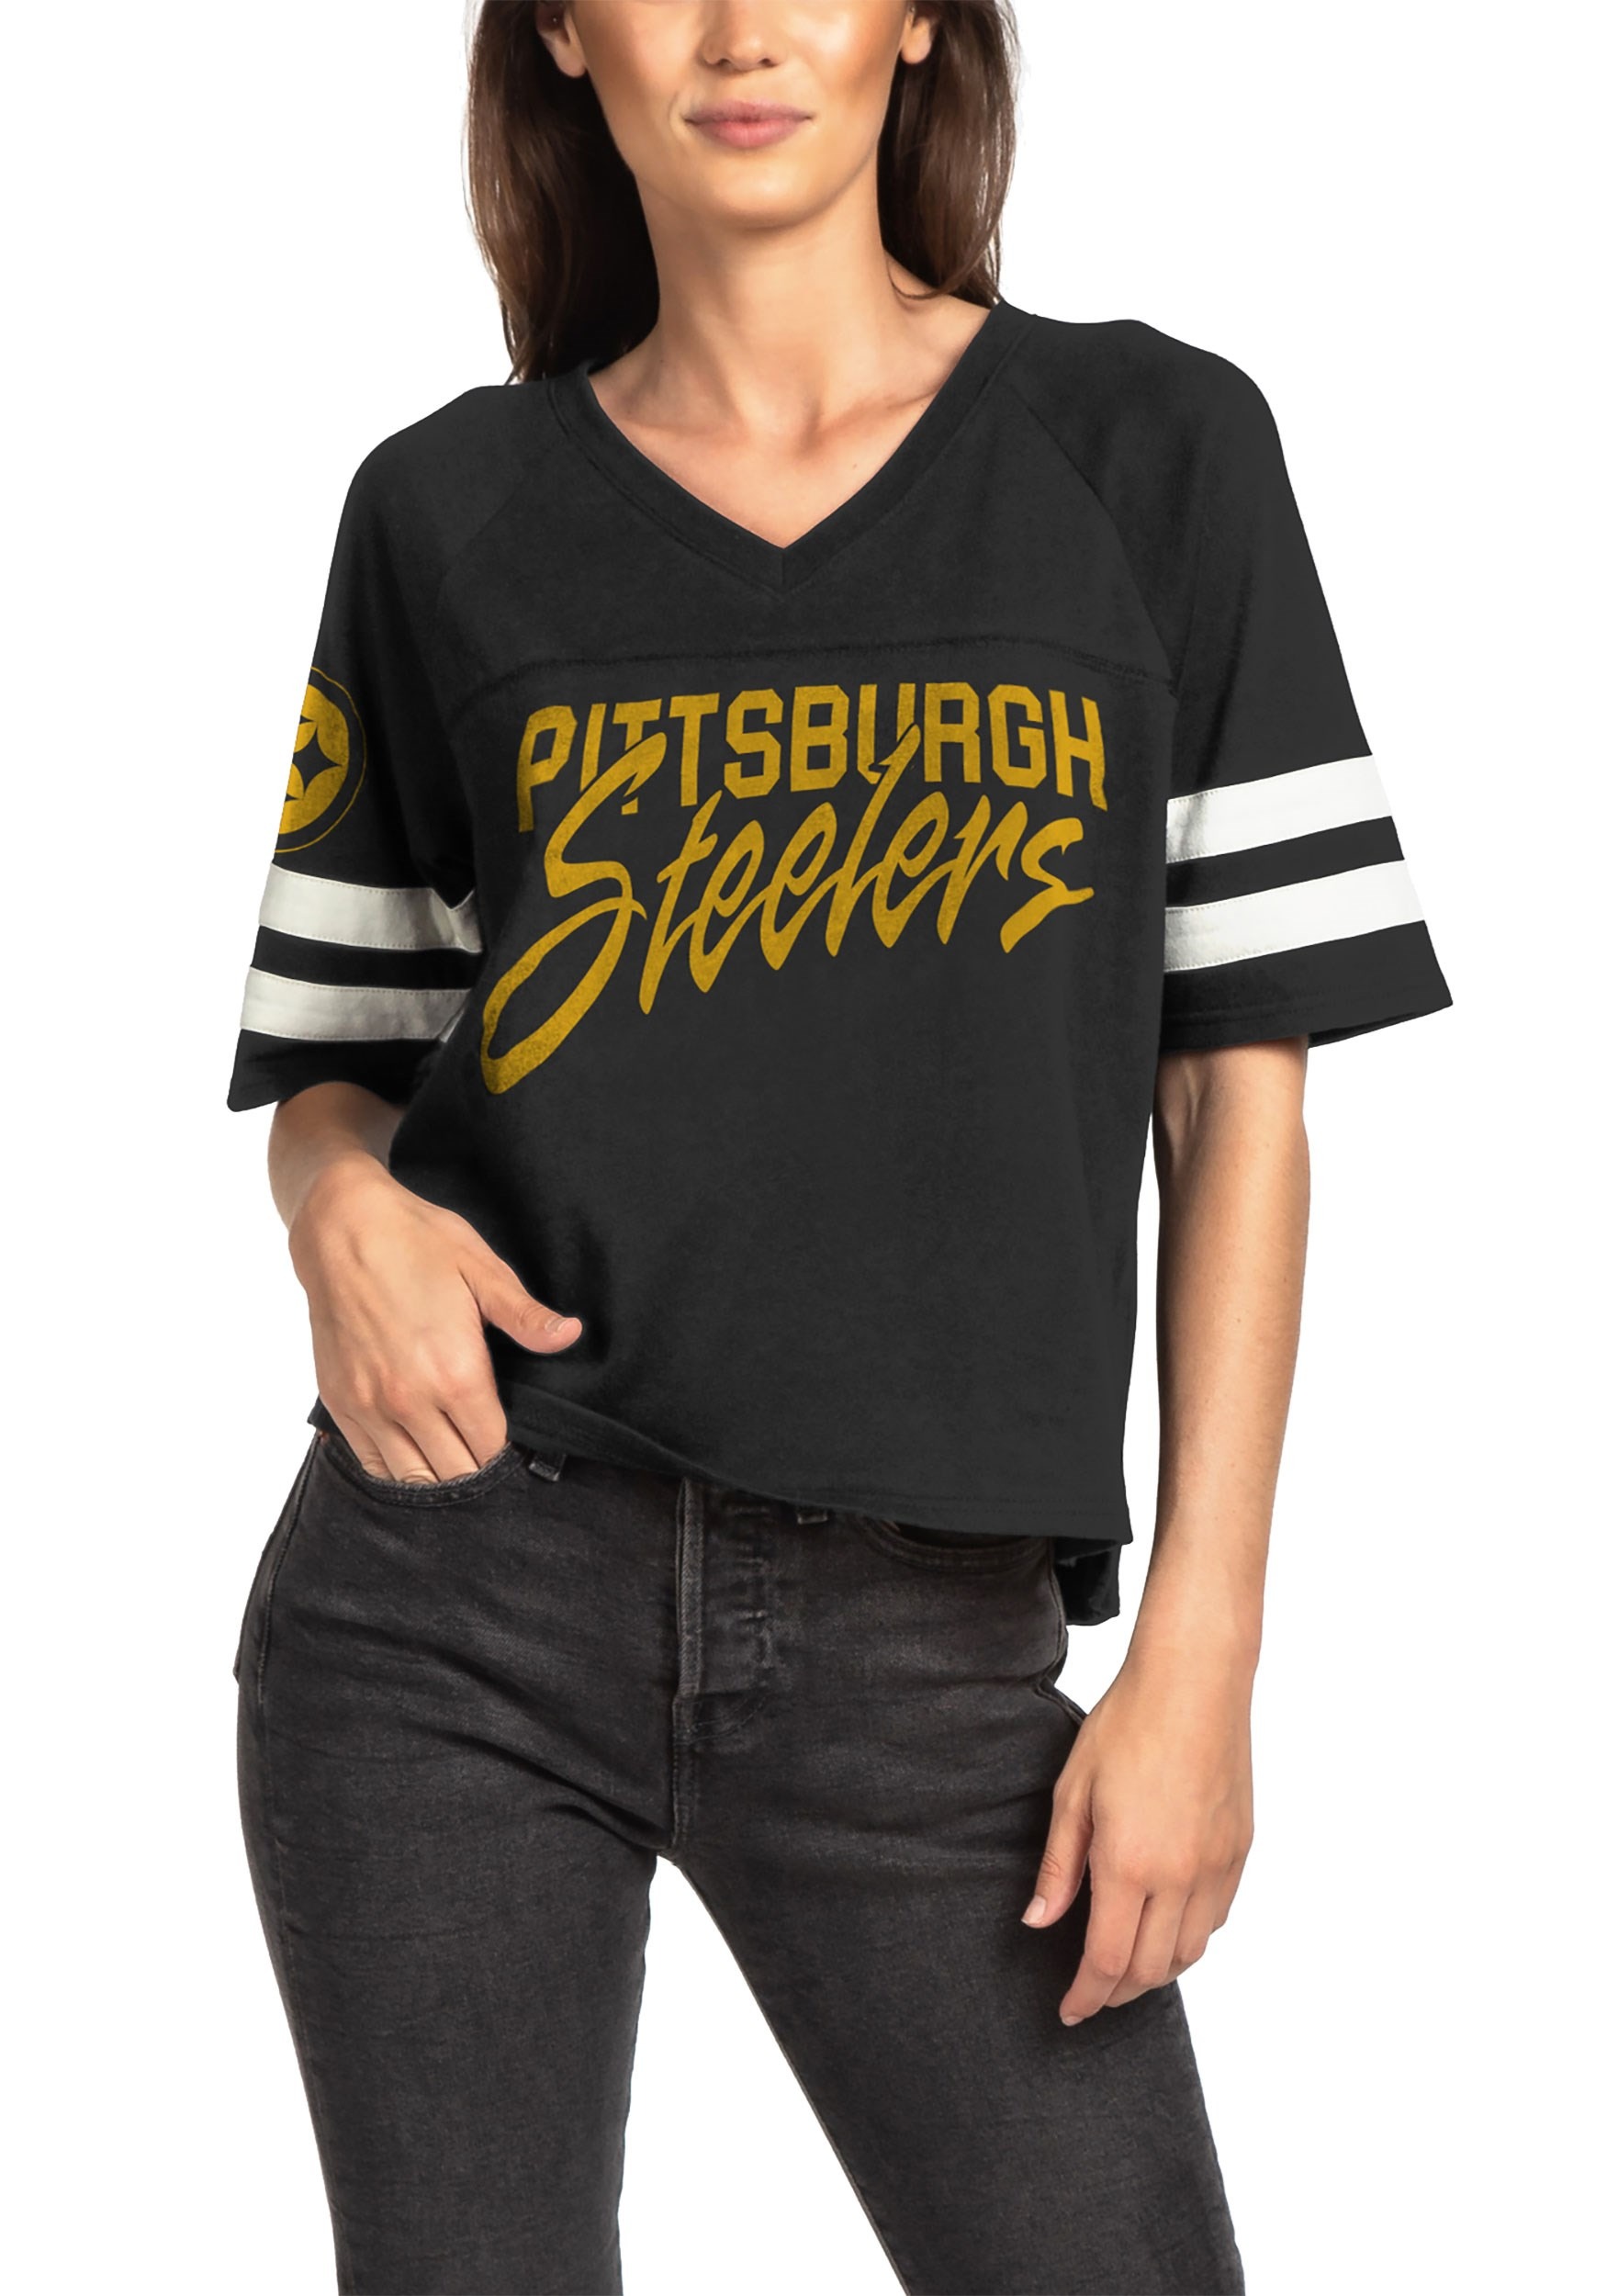 pittsburgh steelers women's t shirts